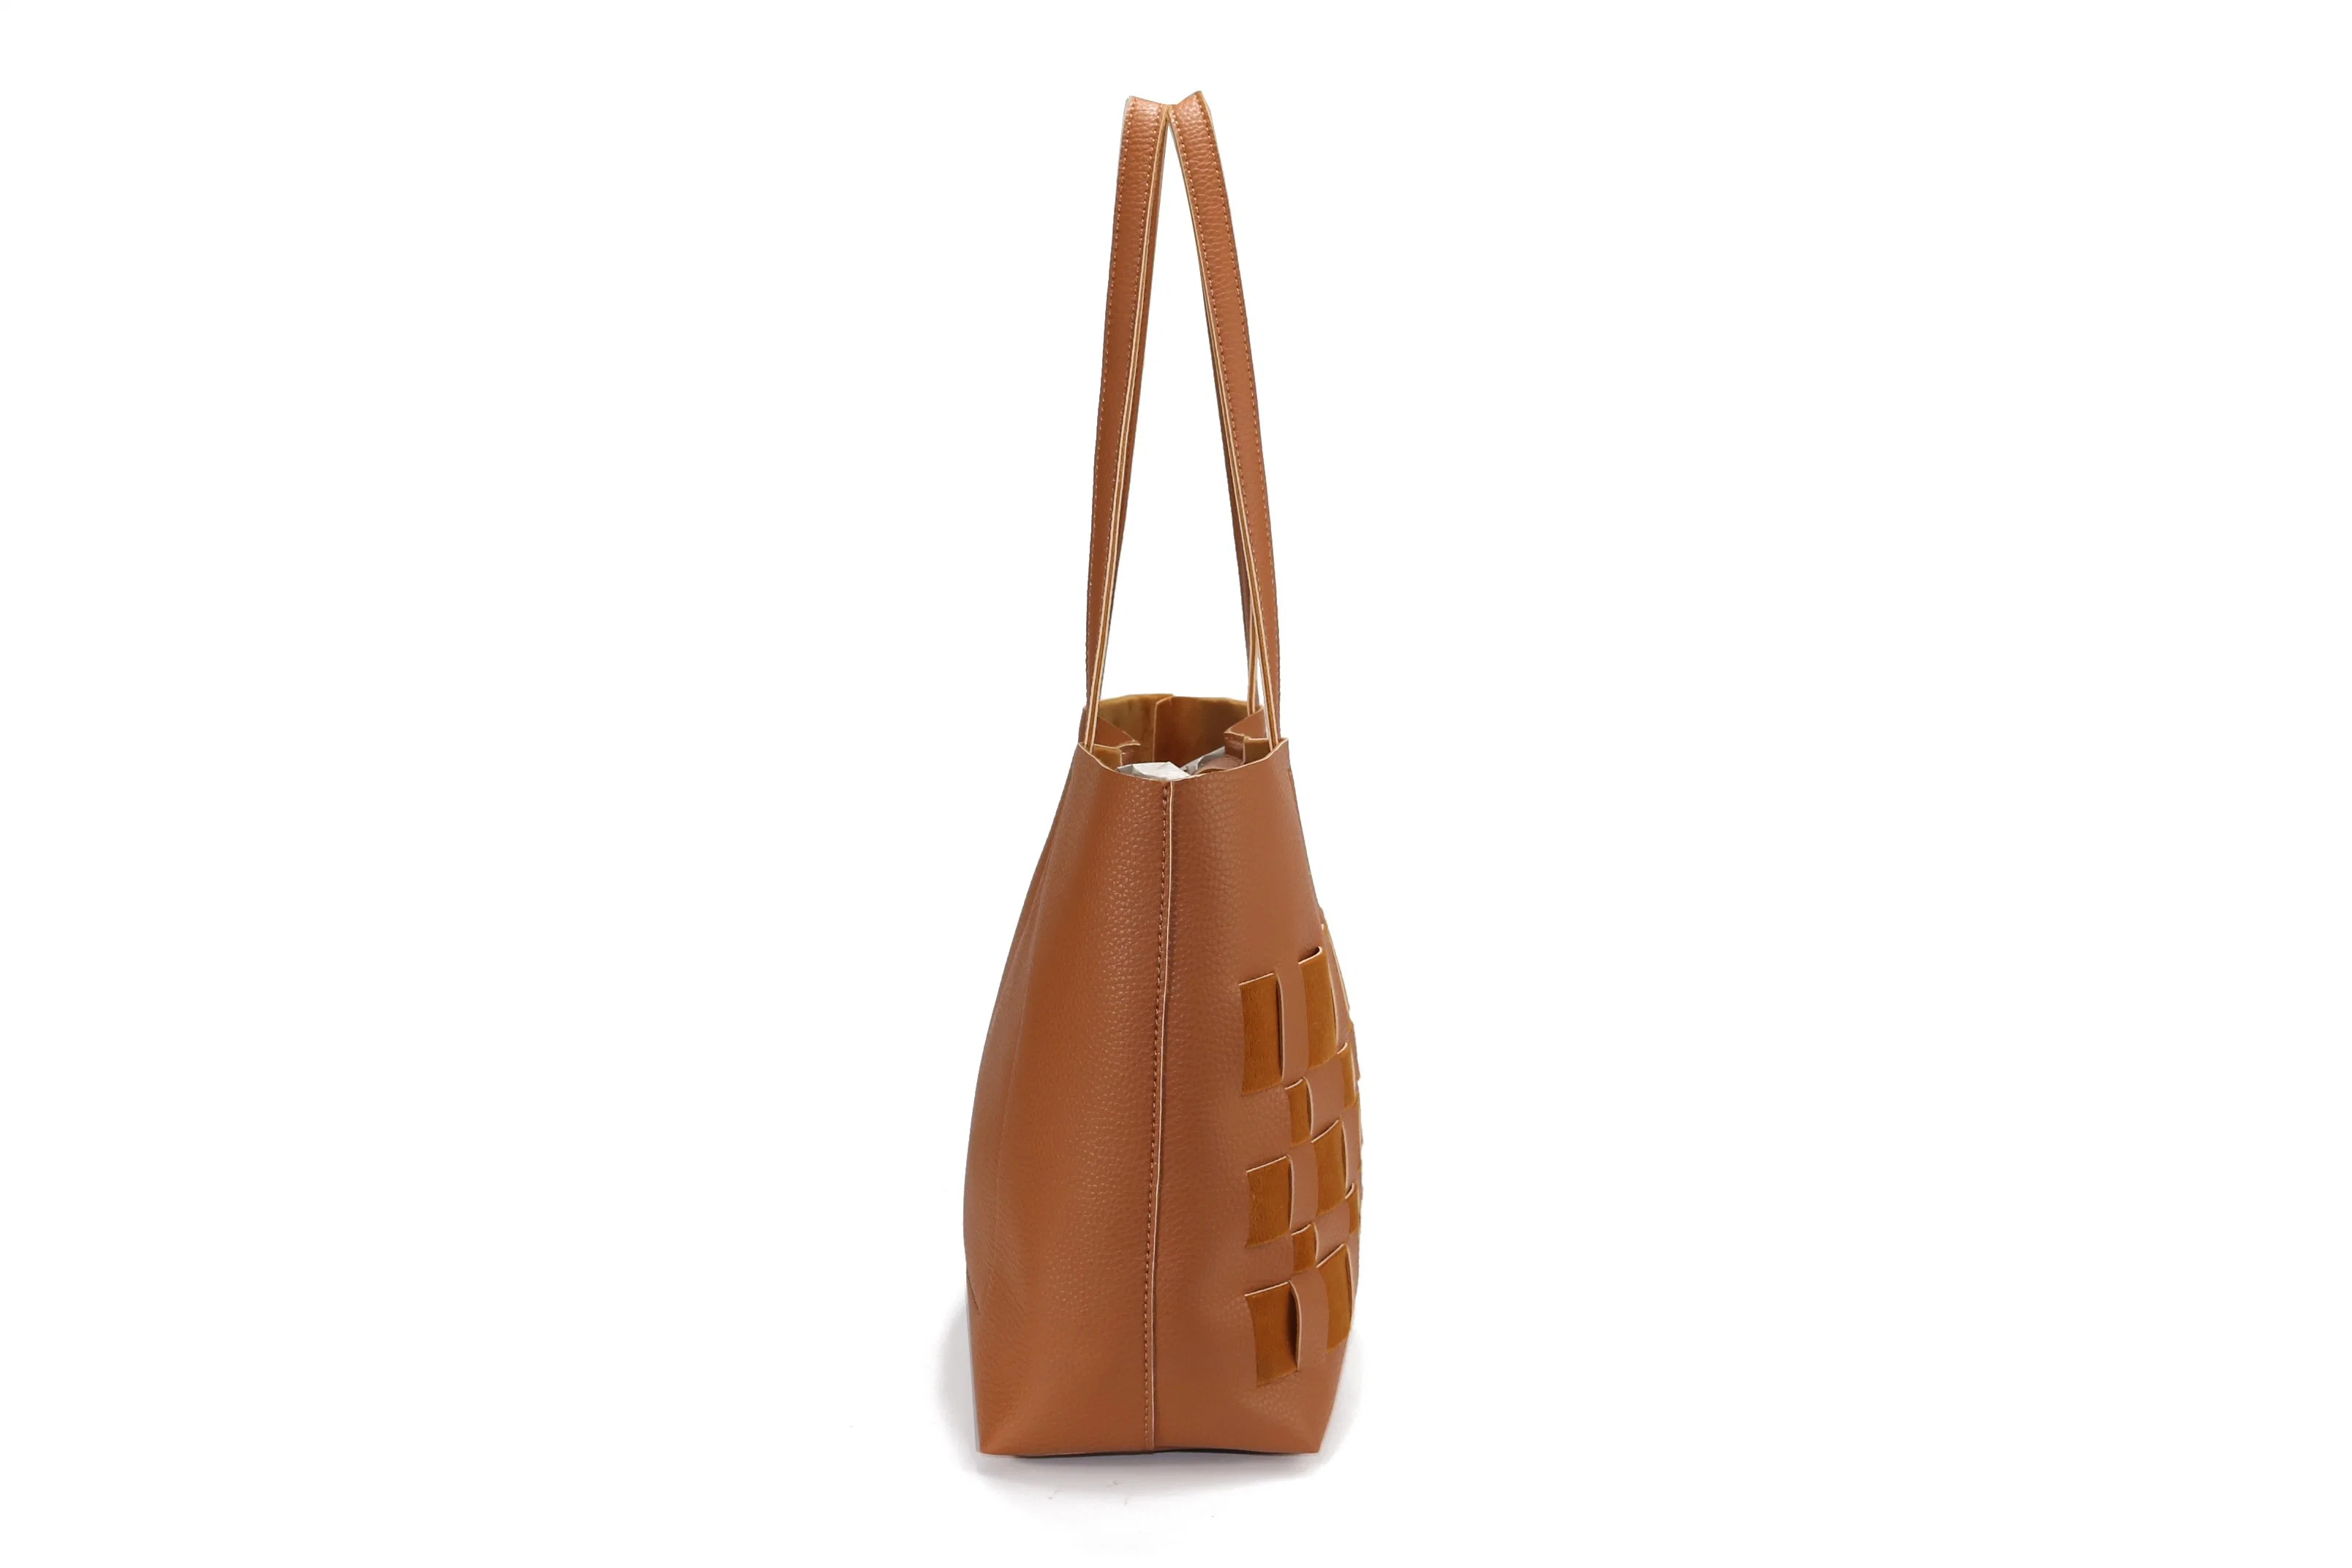 Wholesale/Supplier Manufacturer Customized Weave Bag PU Knit Shopper Woman Shopping Tote Lady Handbag